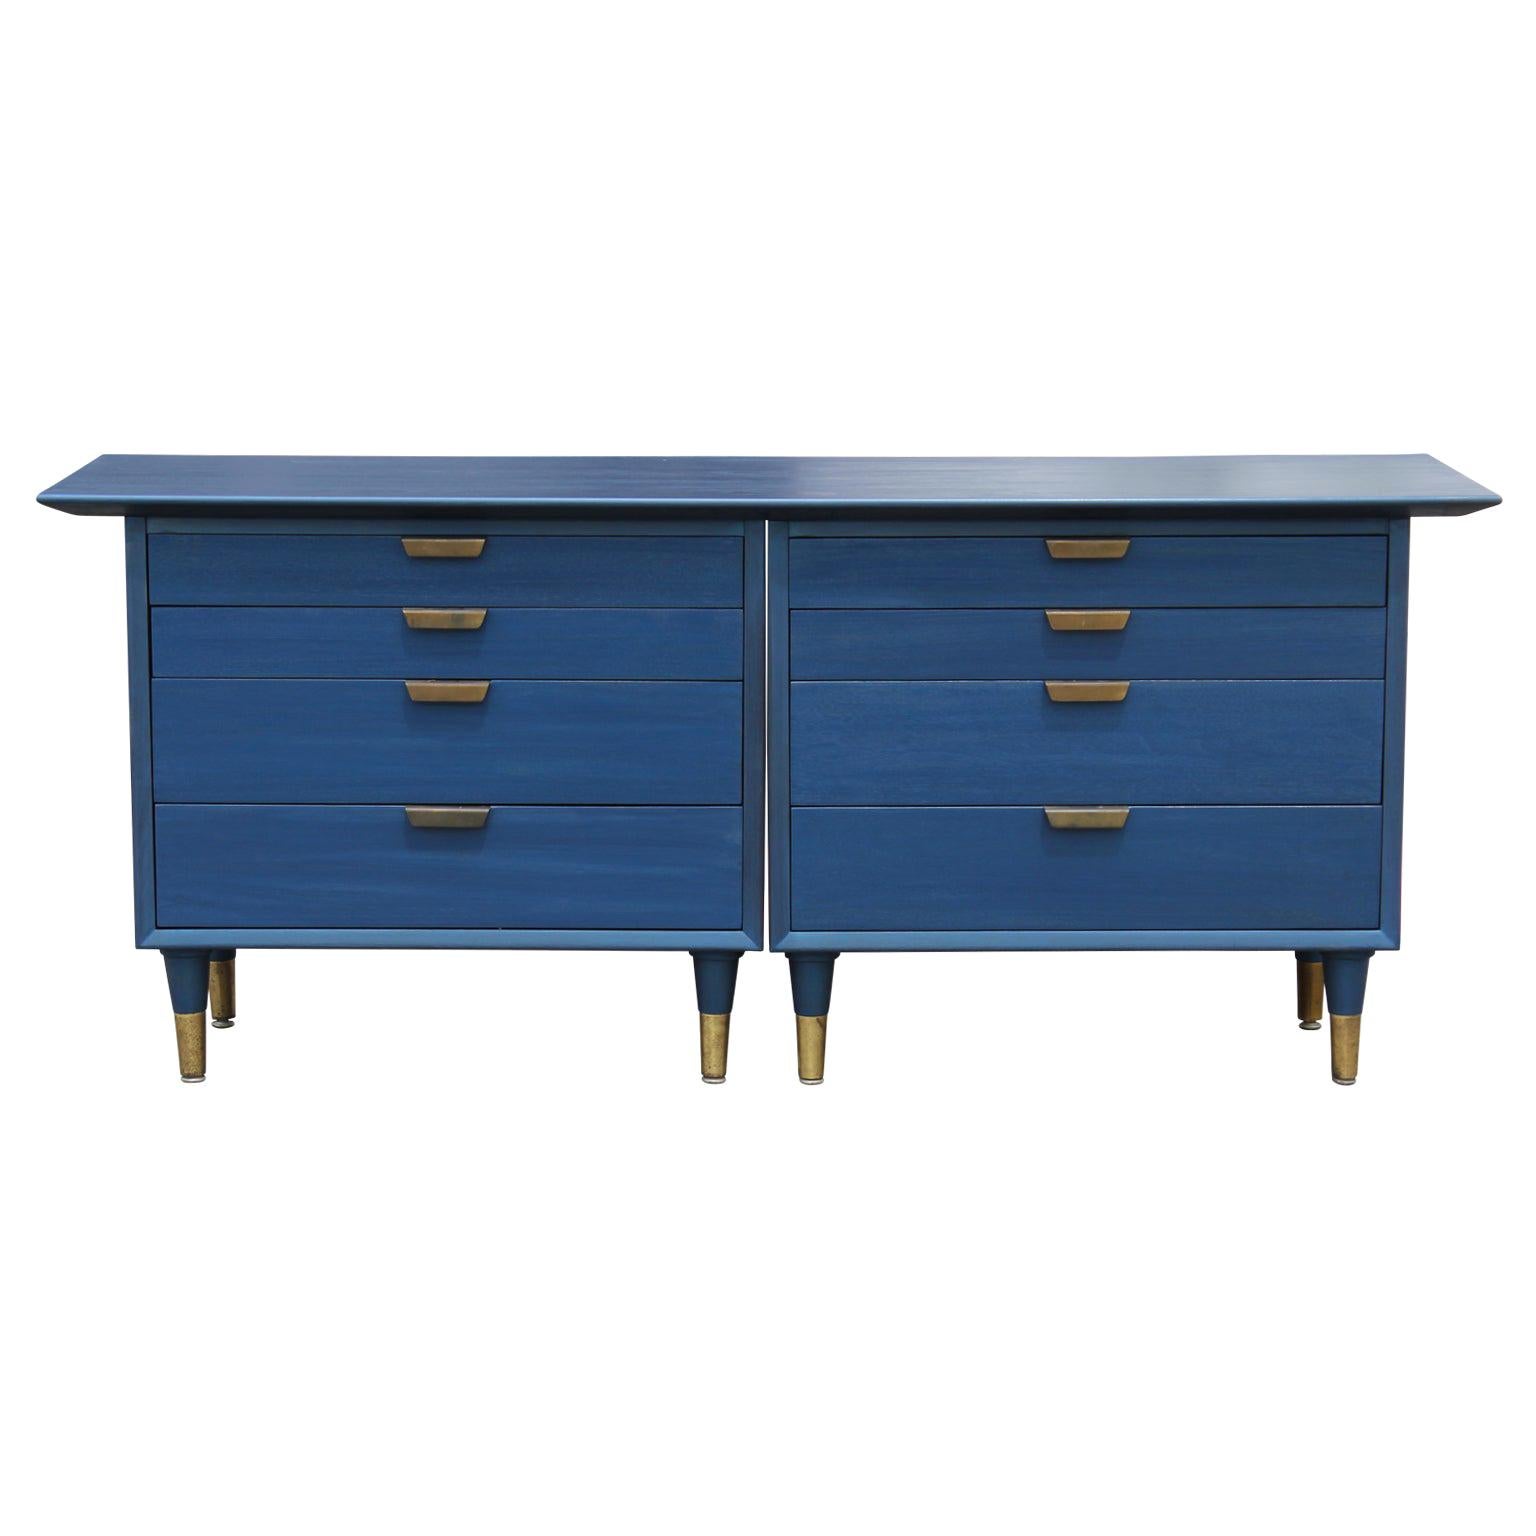 Custom Eight-Drawer Restored Modern Blue Chest or Dresser with Brass Hardware